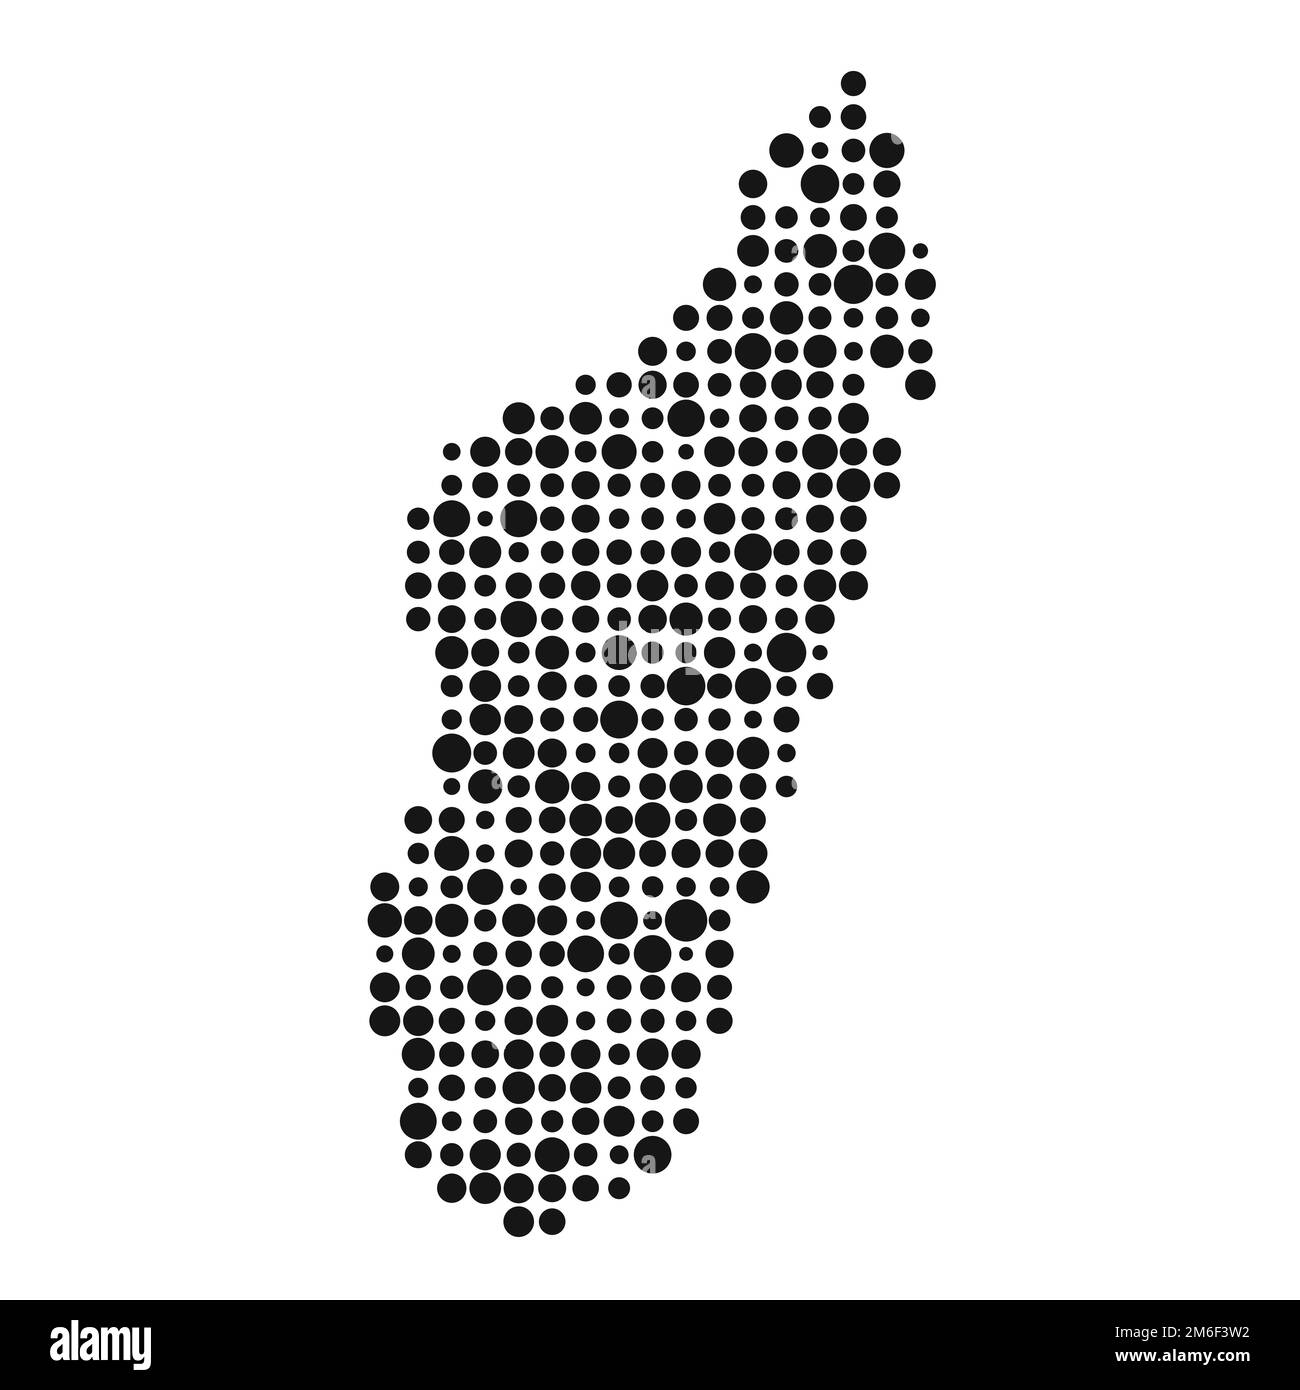 Madagascar Map Silhouette Pixelated generative pattern illustration Stock Vector